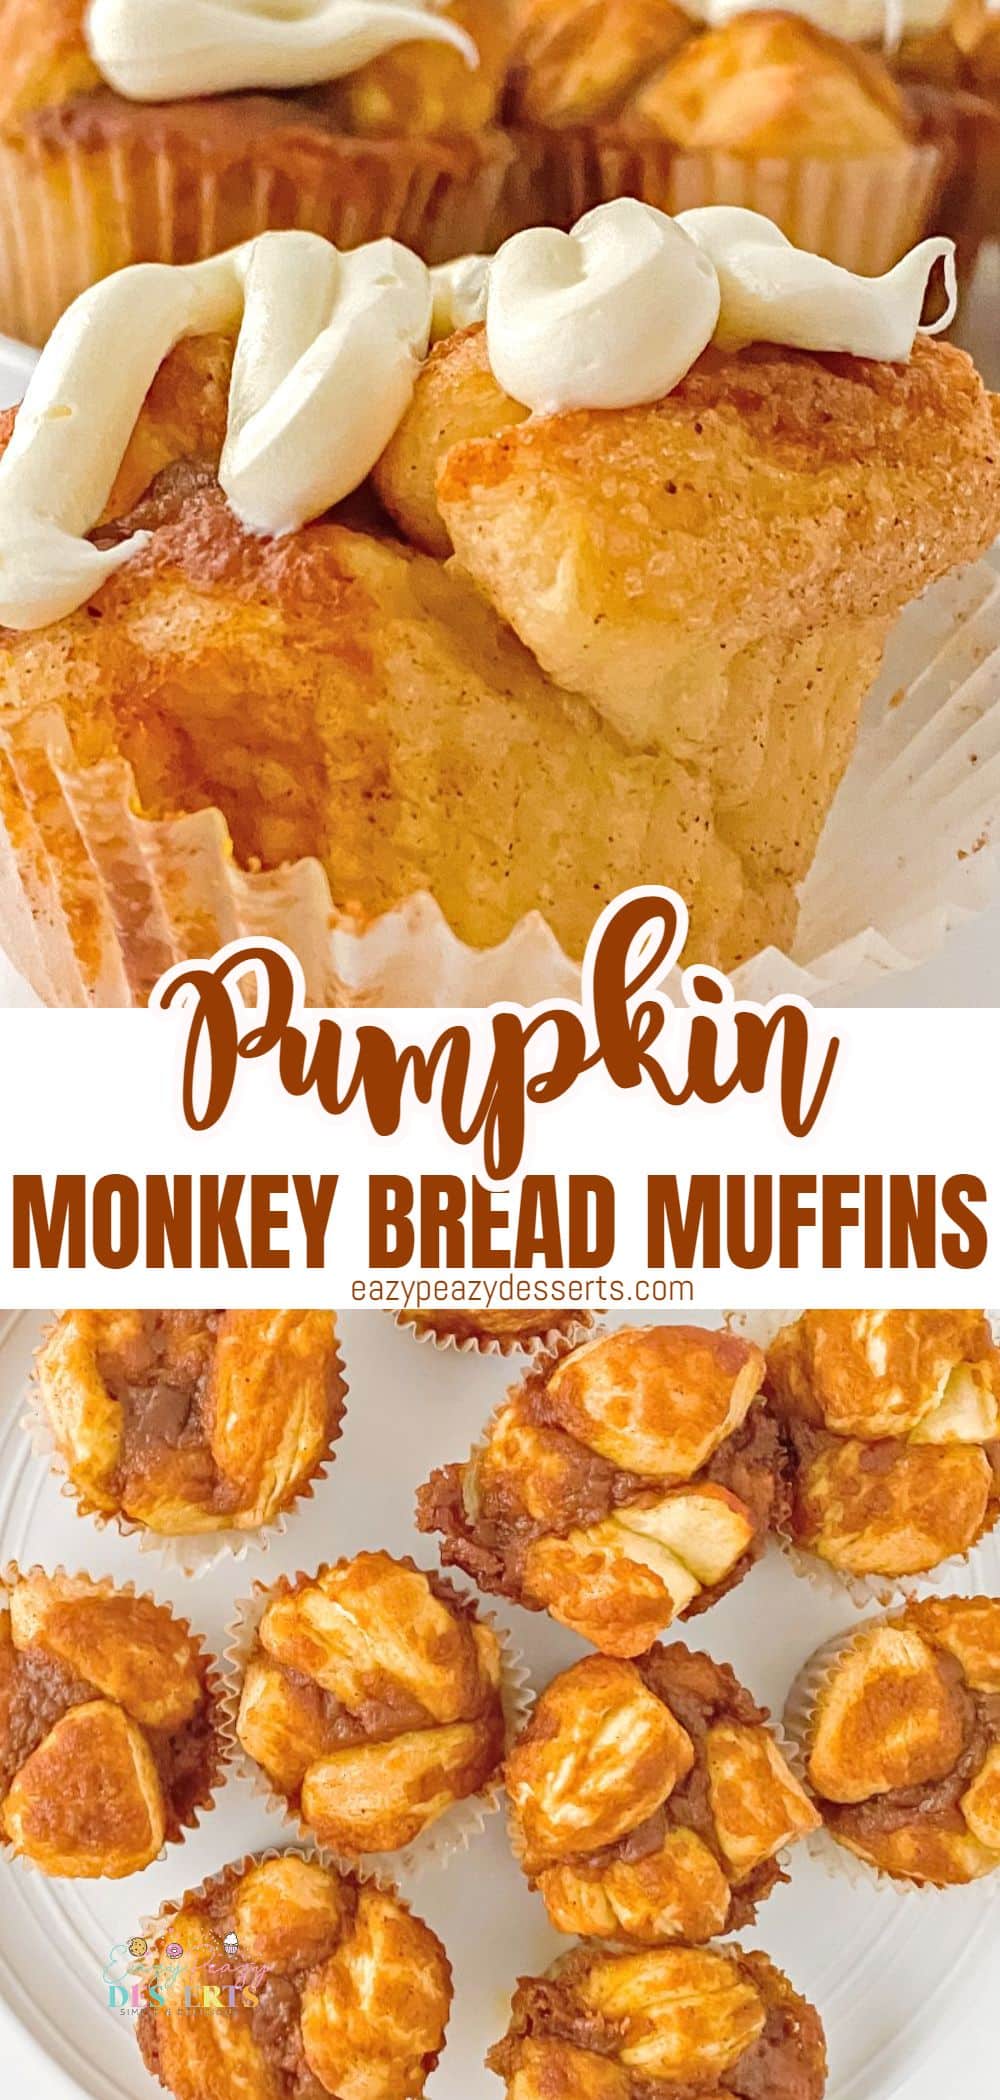 Pumpkin monkey bread muffins